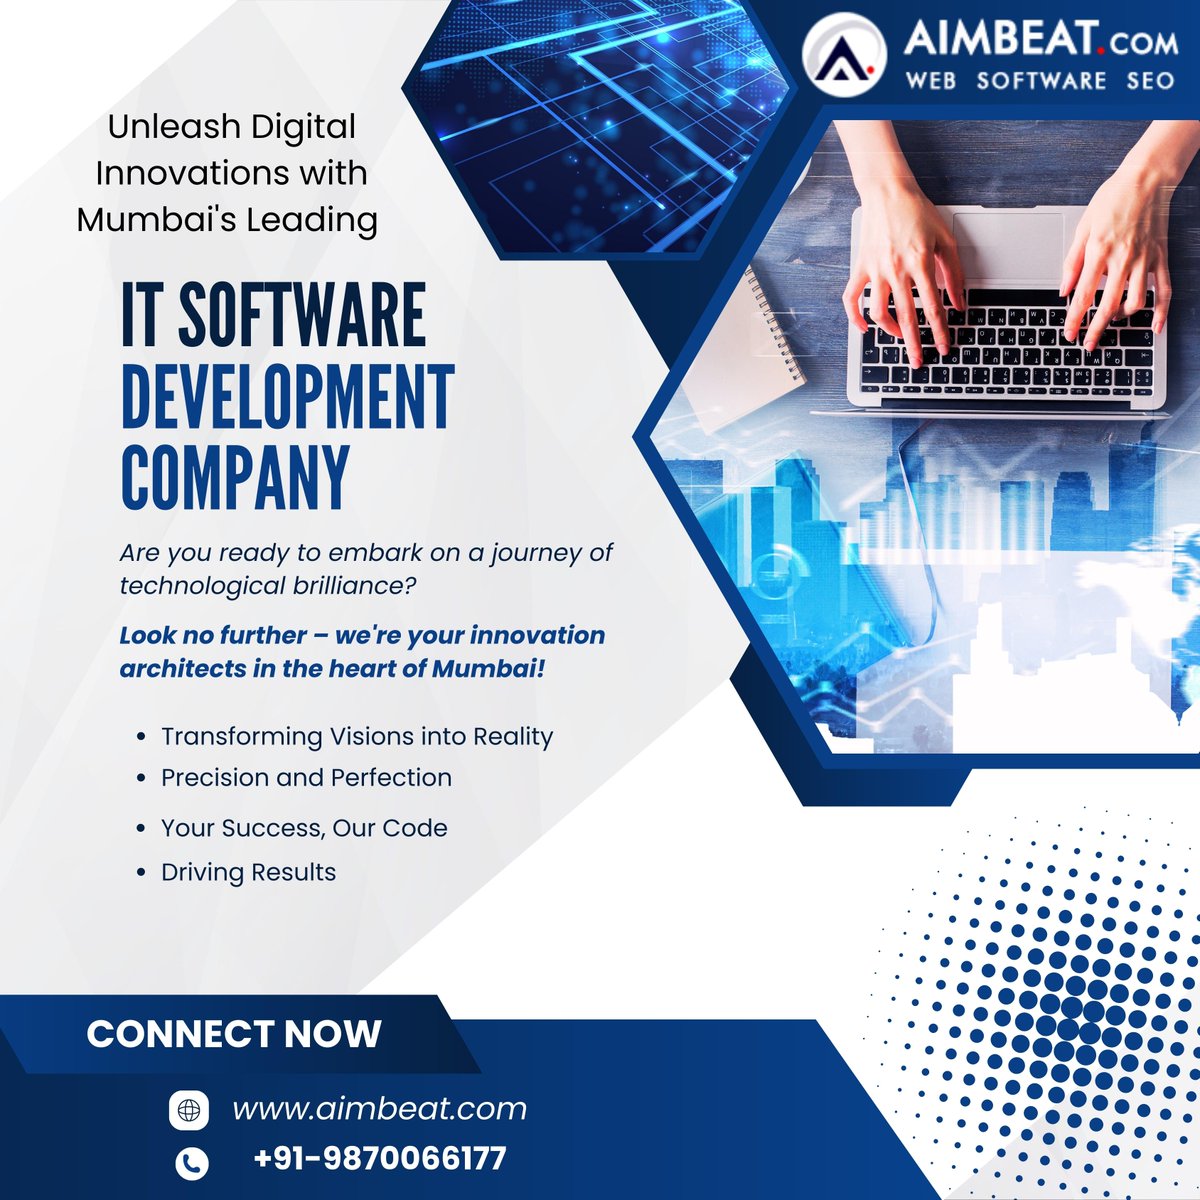 🌐 Elevate with Mumbai's Premier IT Software Development Company 🚀
Visit: aimbeat.com 

#Aimbeat #Softwaredevelopment #softwaredevelopmentcompany #ITSoftwareDevelopment #InnovationArchitects #DigitalTransformation #MumbaiTech #CuttingEdgeSolutions #PrecisionCoding